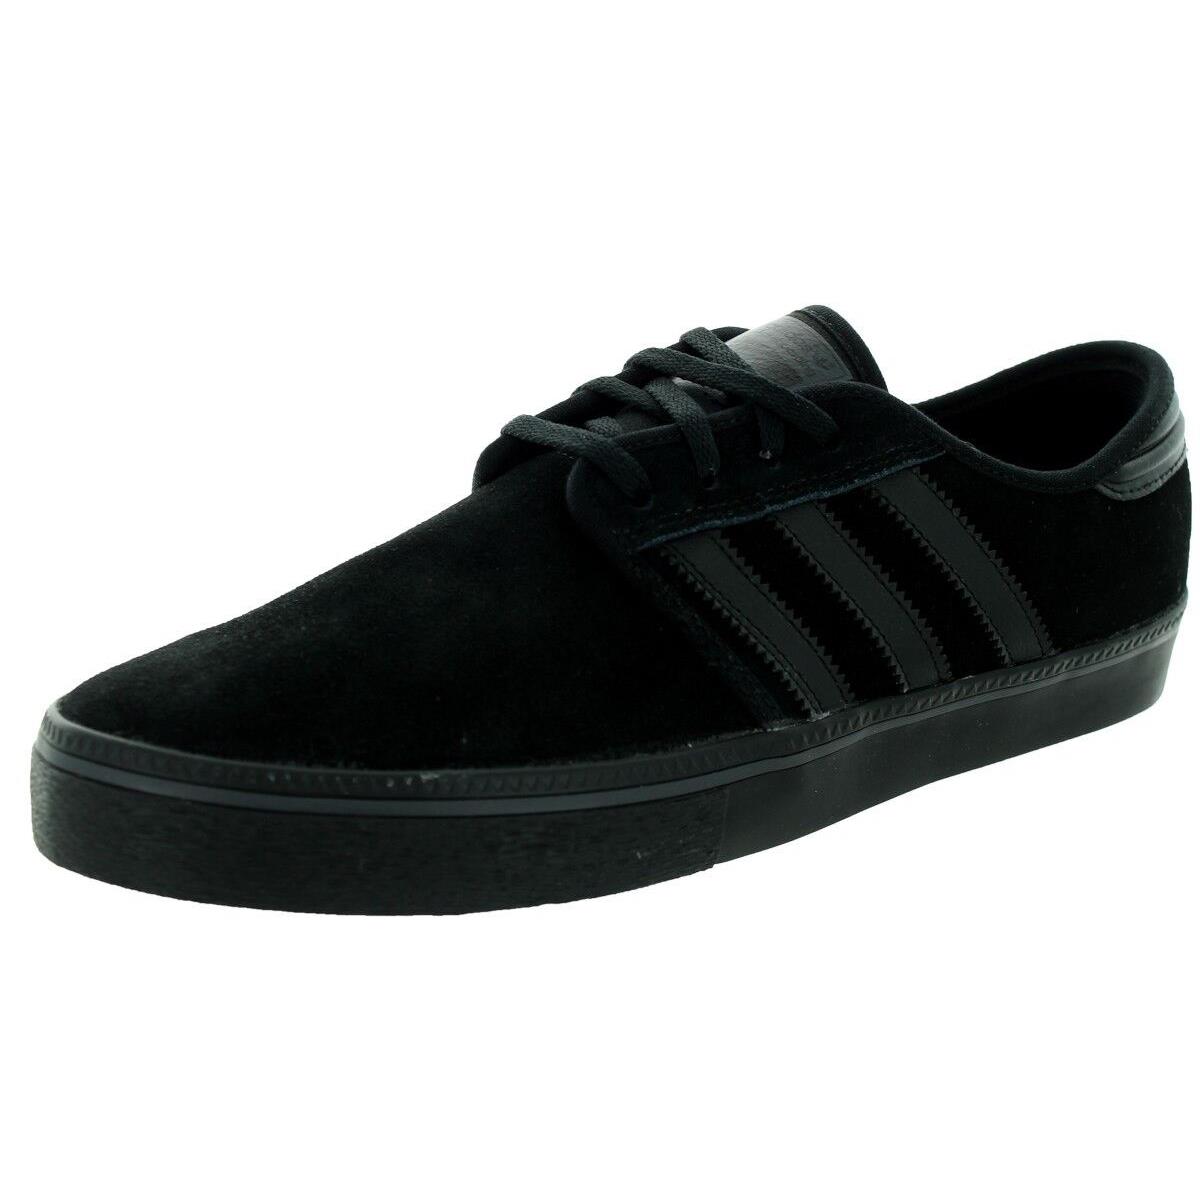 Adidas Seeley Adv Black Black Skateboarding Sneaker C76906 317 Men`s Shoes - Black